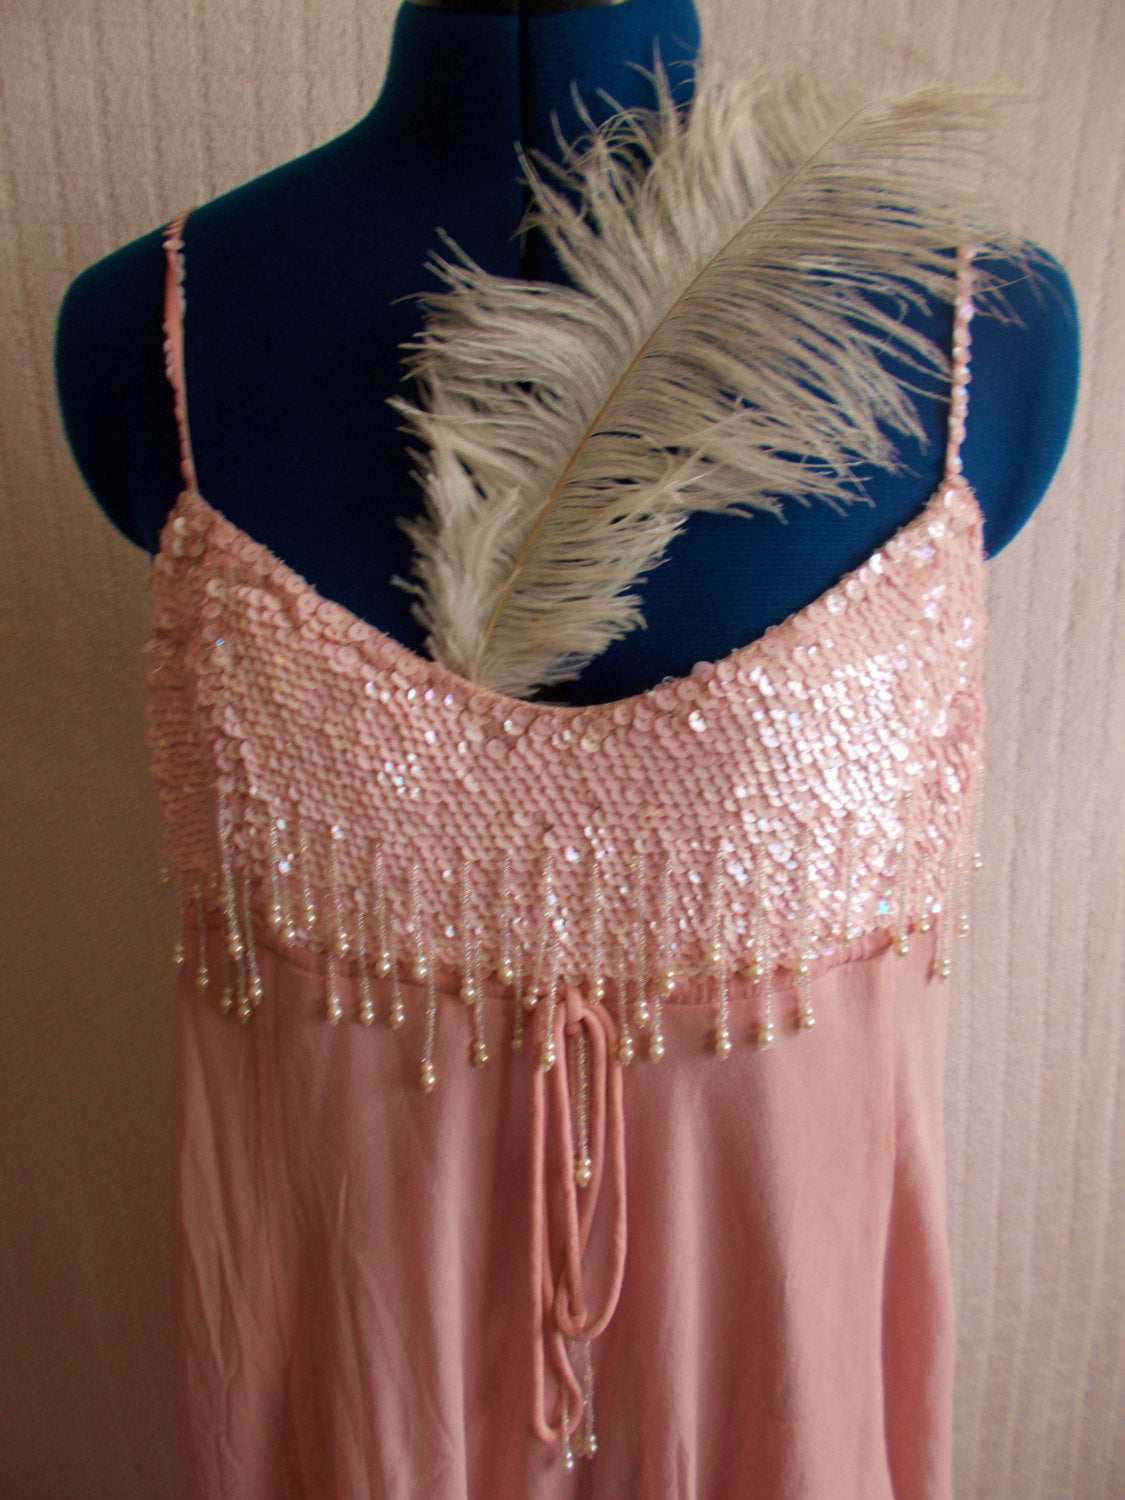 Whistles Vintage Pink Sparkly Beaded Gatsby Style dress Size Uk 14. Charleston, Bugsy Malone, Gatsby style dress. Wonkey Donkey Bazaar